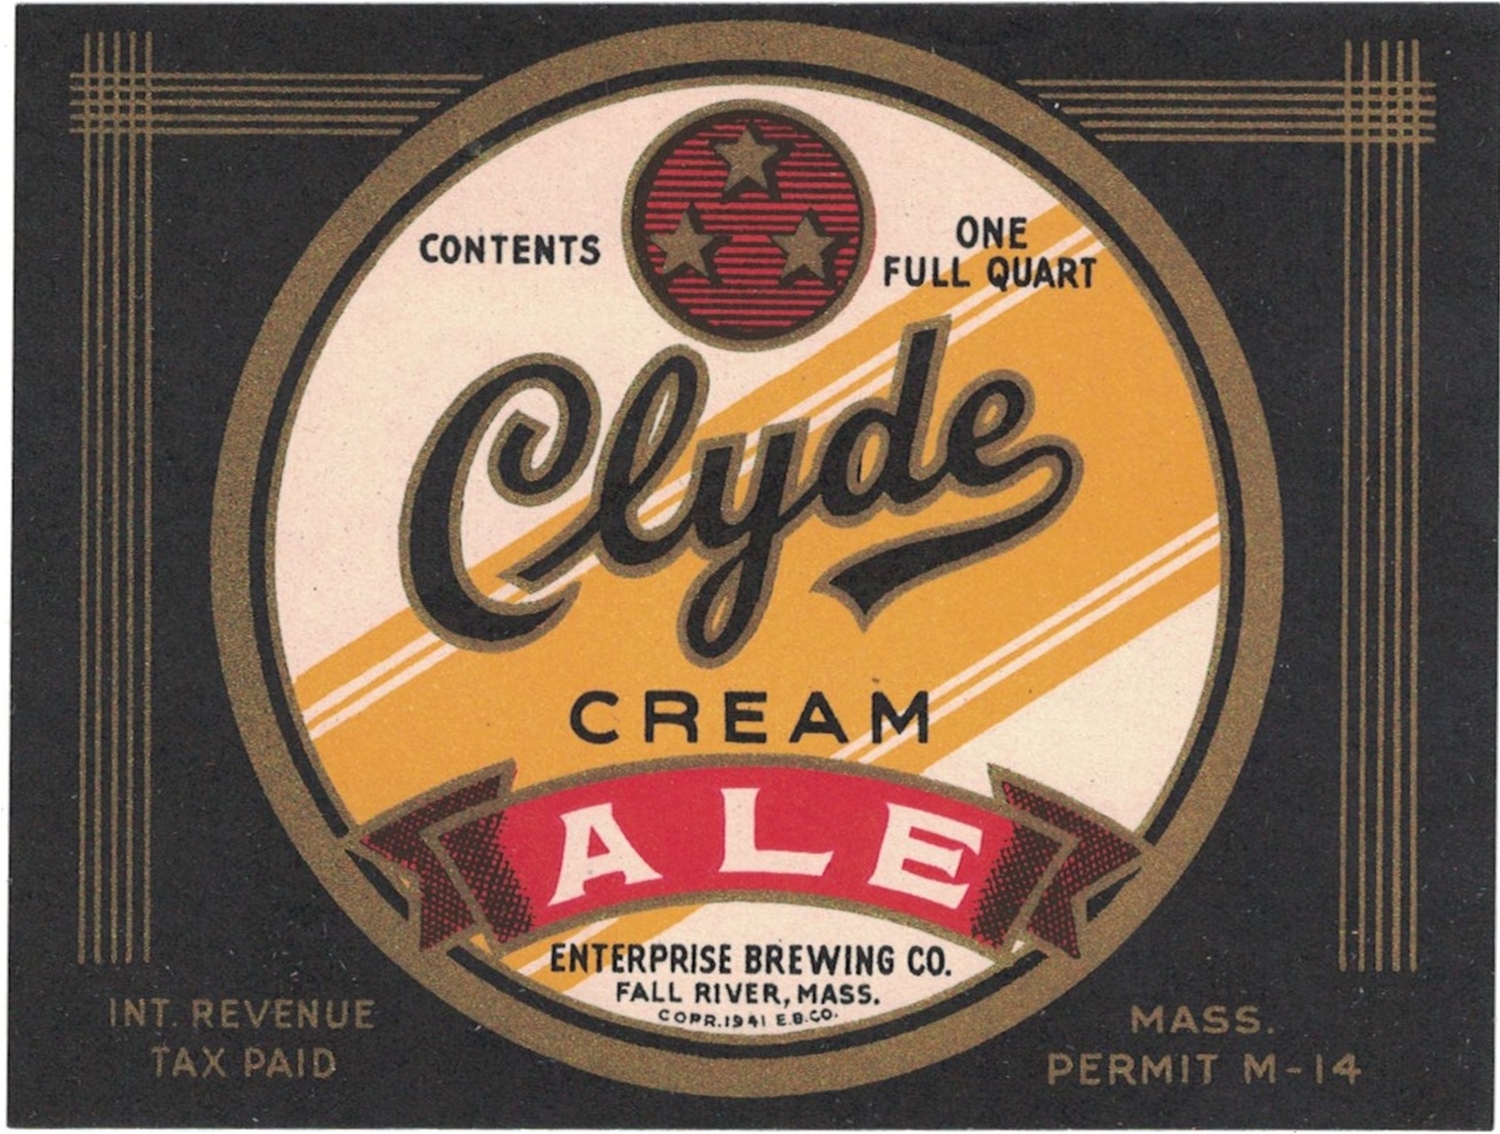 Clyde Cream Ale IRTP Beer Label